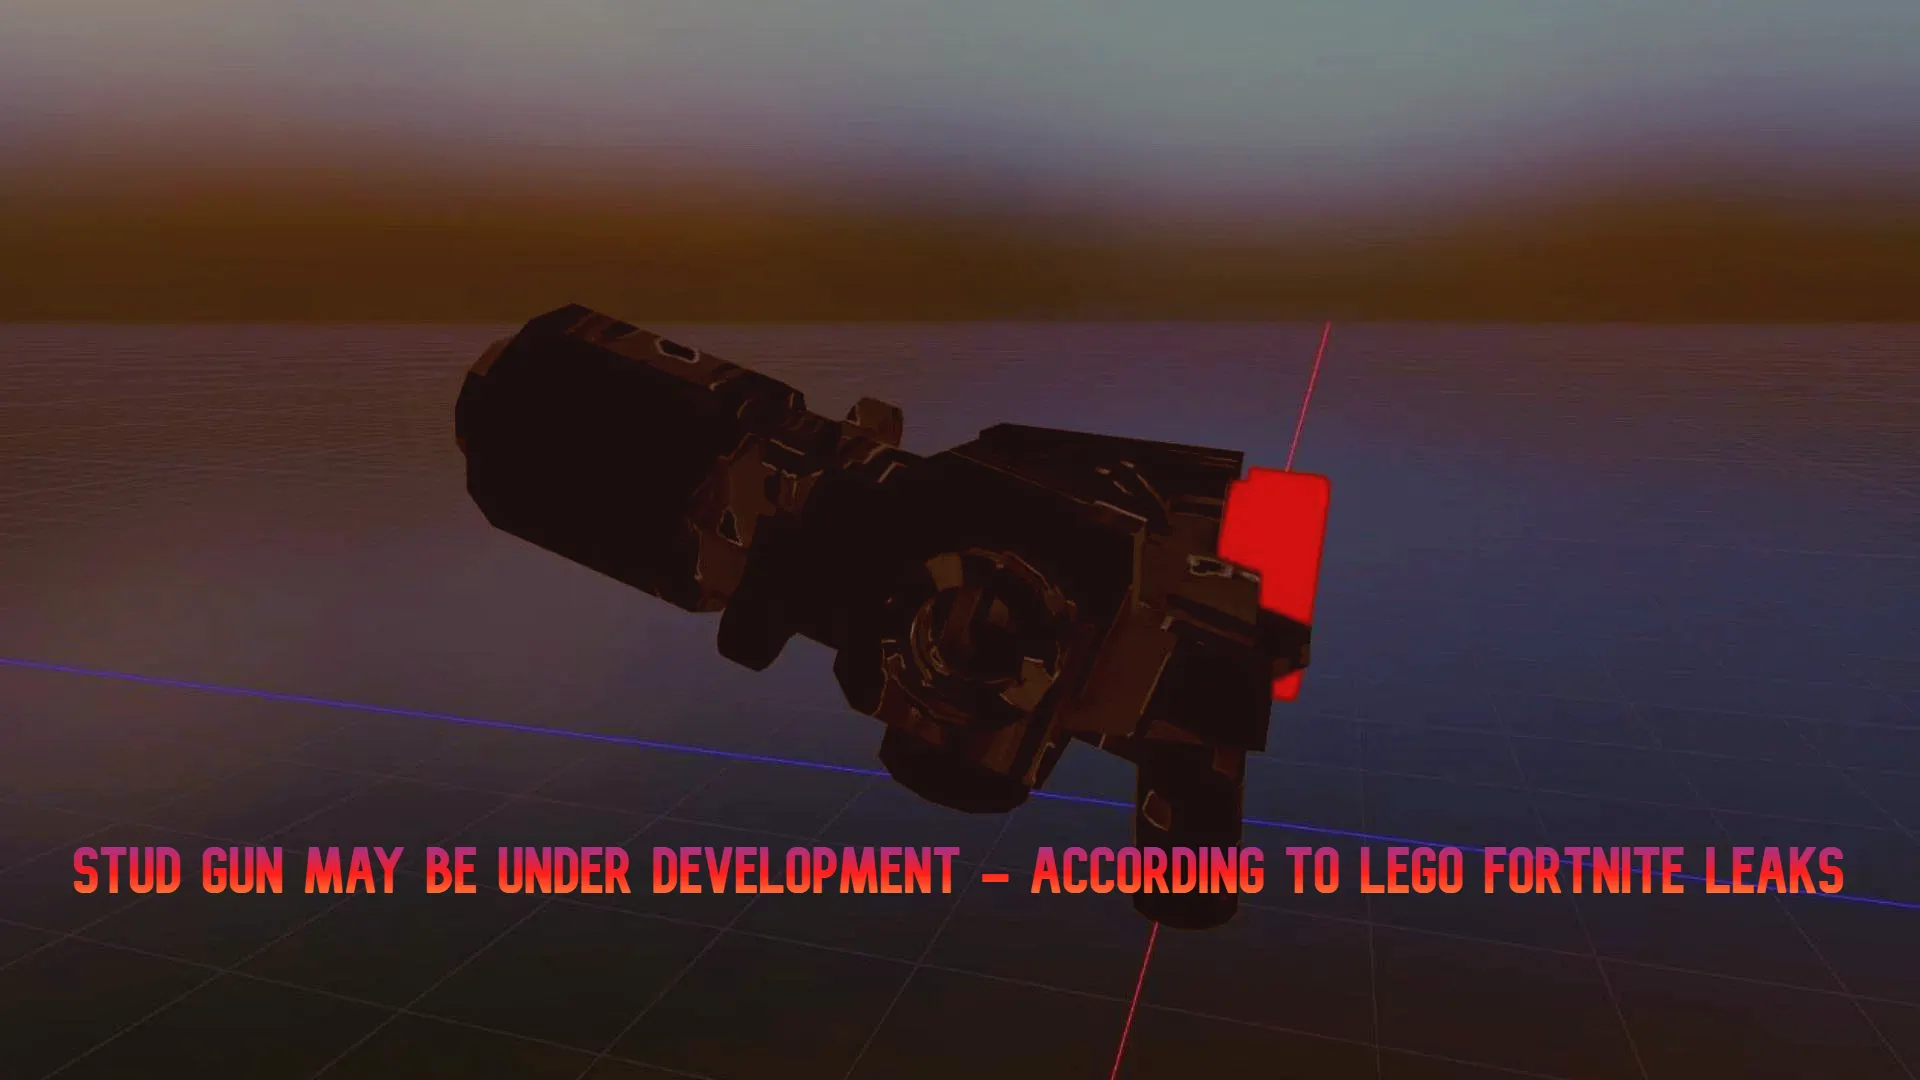 Stud Gun May Be Under Development - According to LEGO Fortnite Leaks